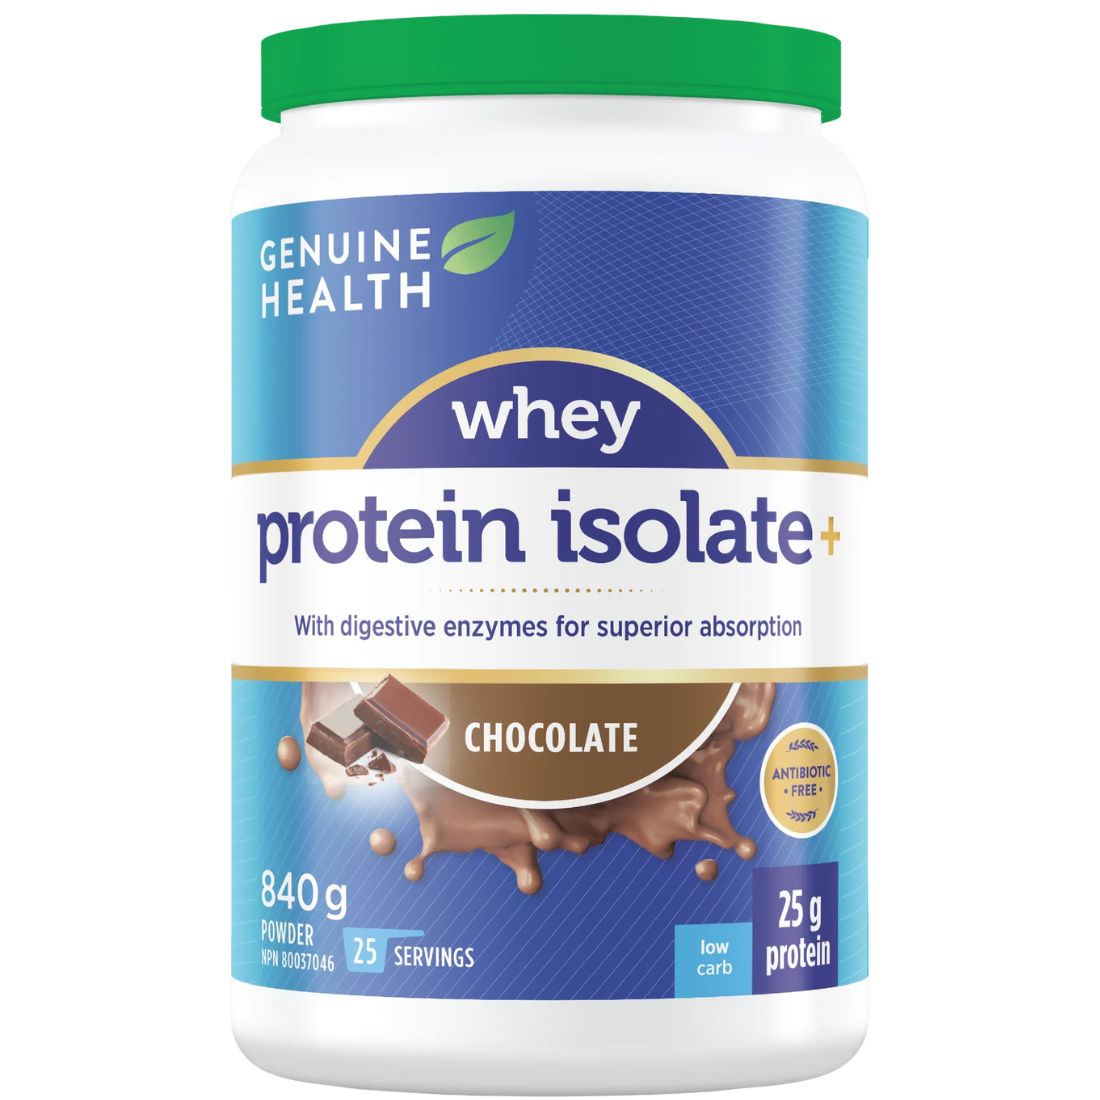 genuine-health-whey-protein-chocolate-840g